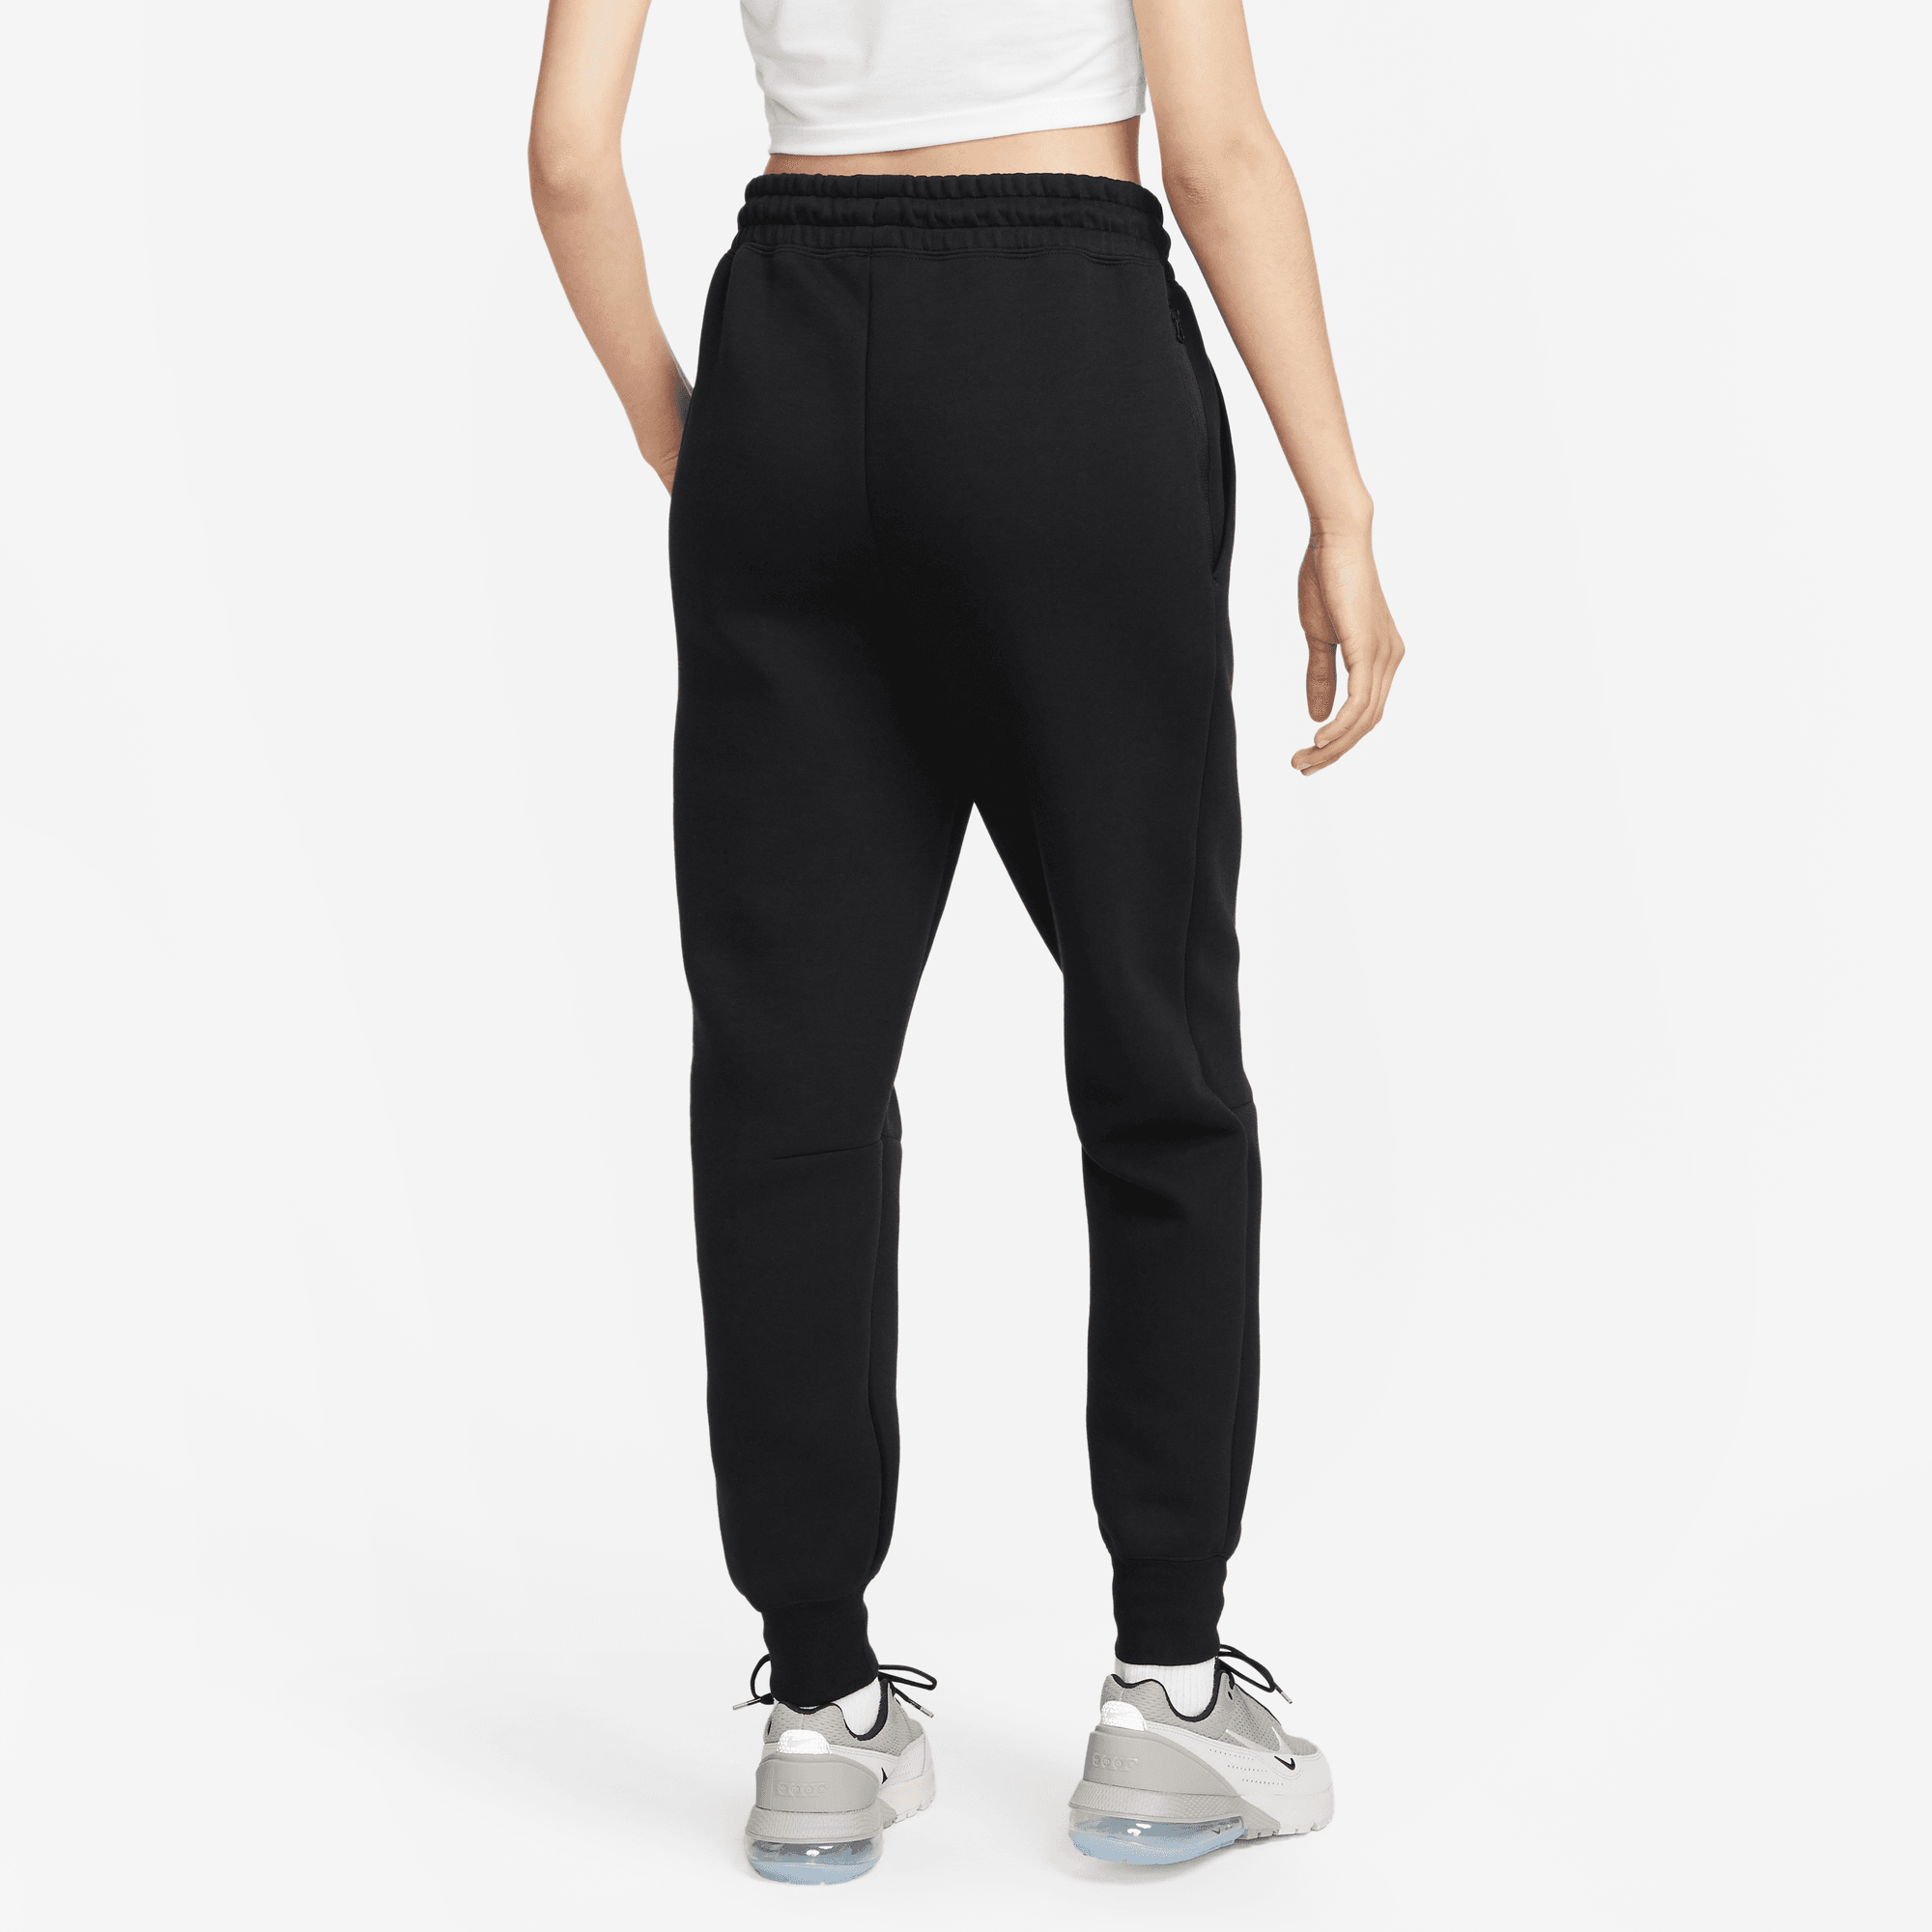 Nike Sportswear Tech Fleece Mid-Rise Jogger Pants 'Deep Jungle/Black' -  FB8330-328